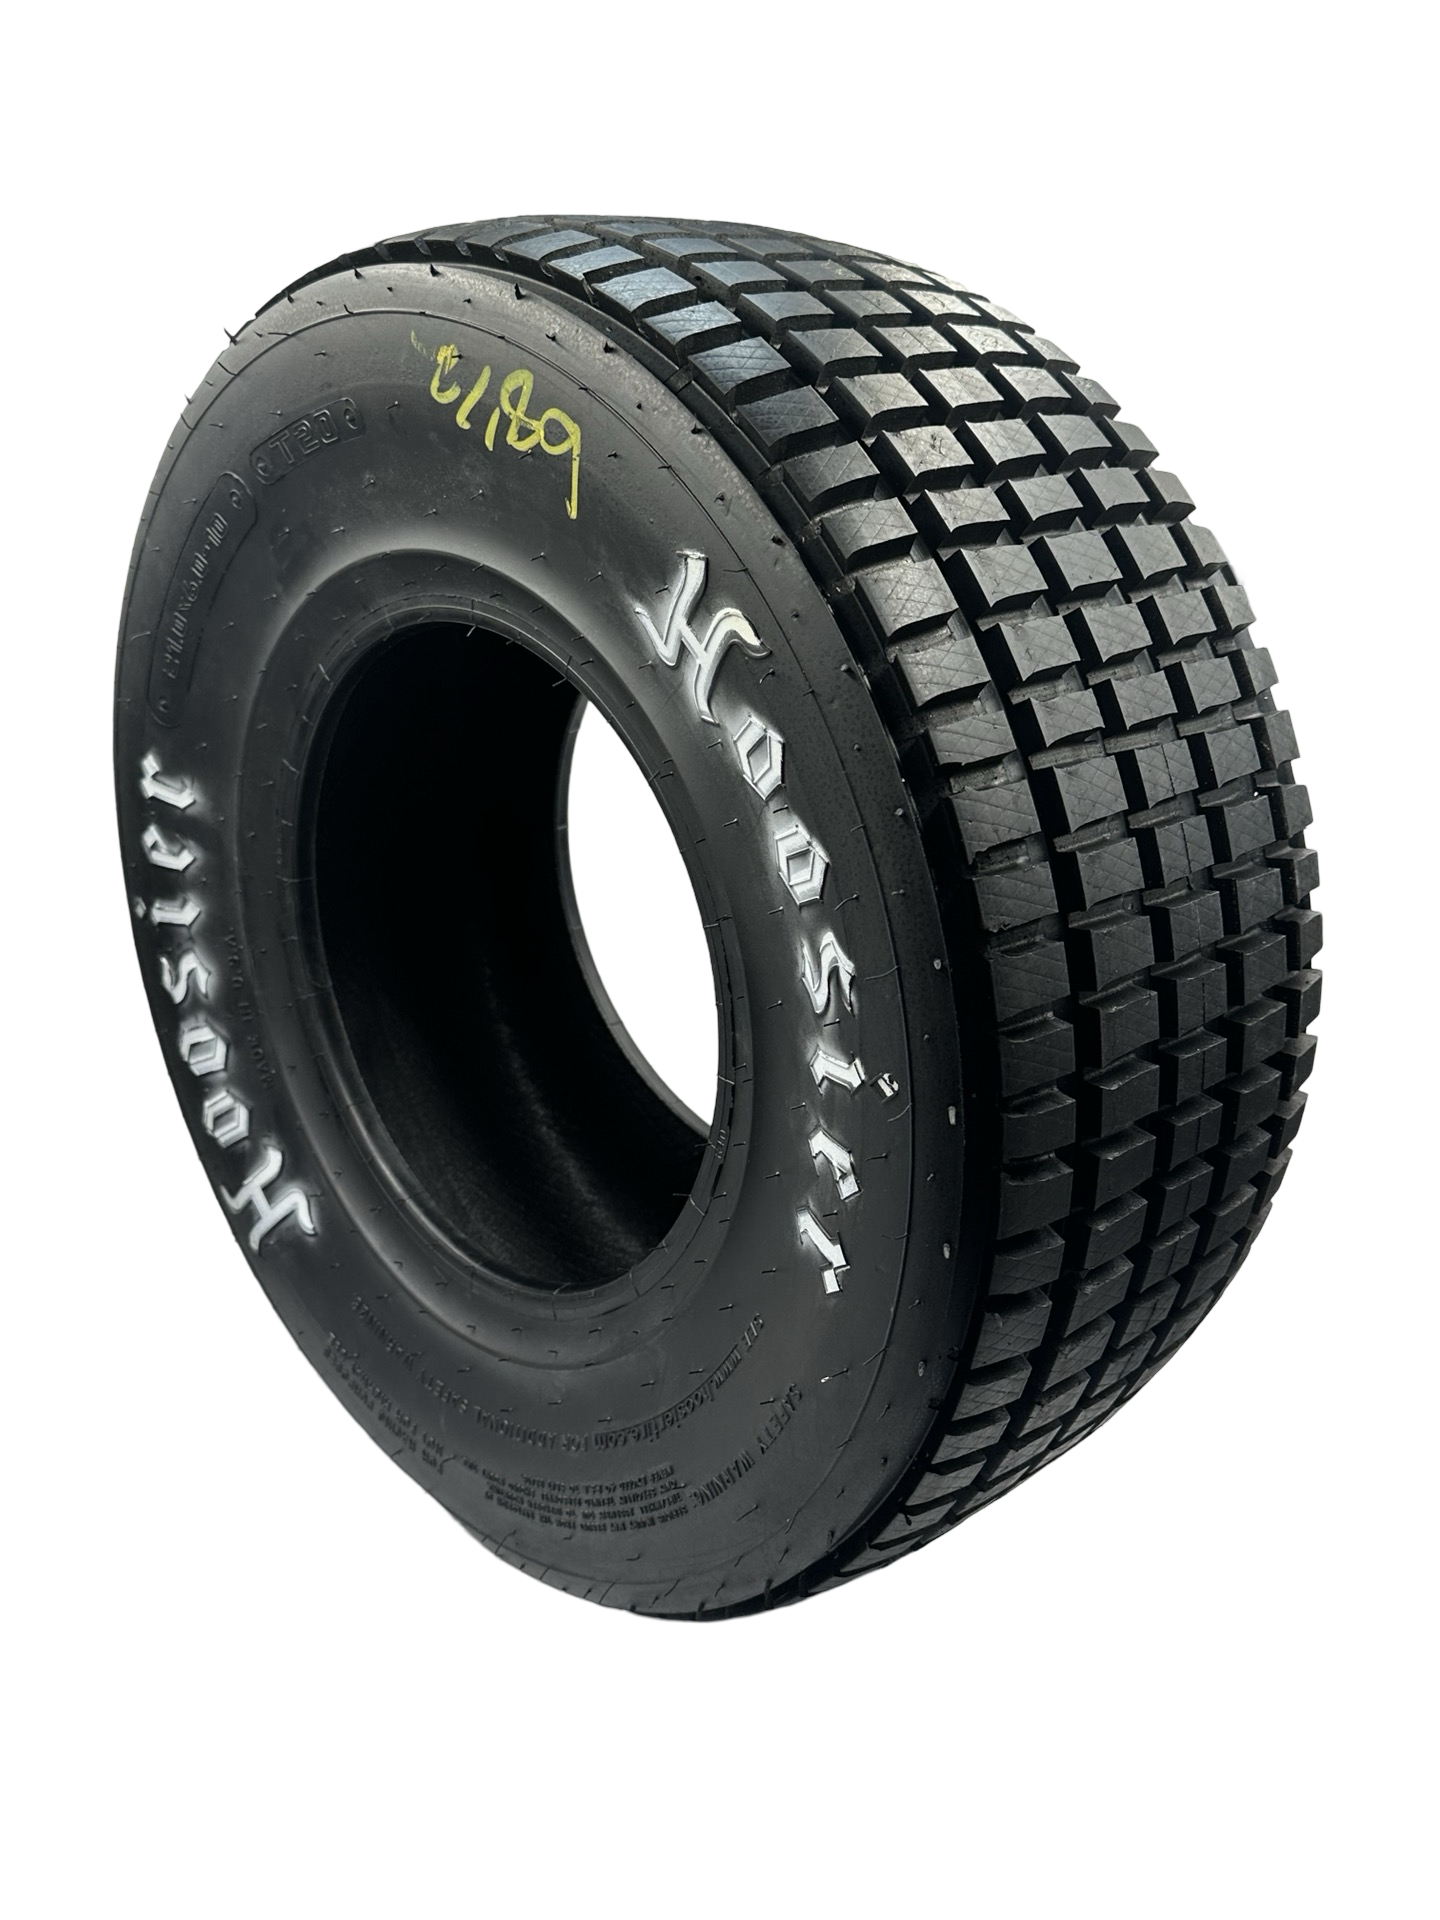 Hoosier UTV 21x6-10 T-20 Tire Prepped and Grooved for RZR170, RZR200, HiSun 250, etc.